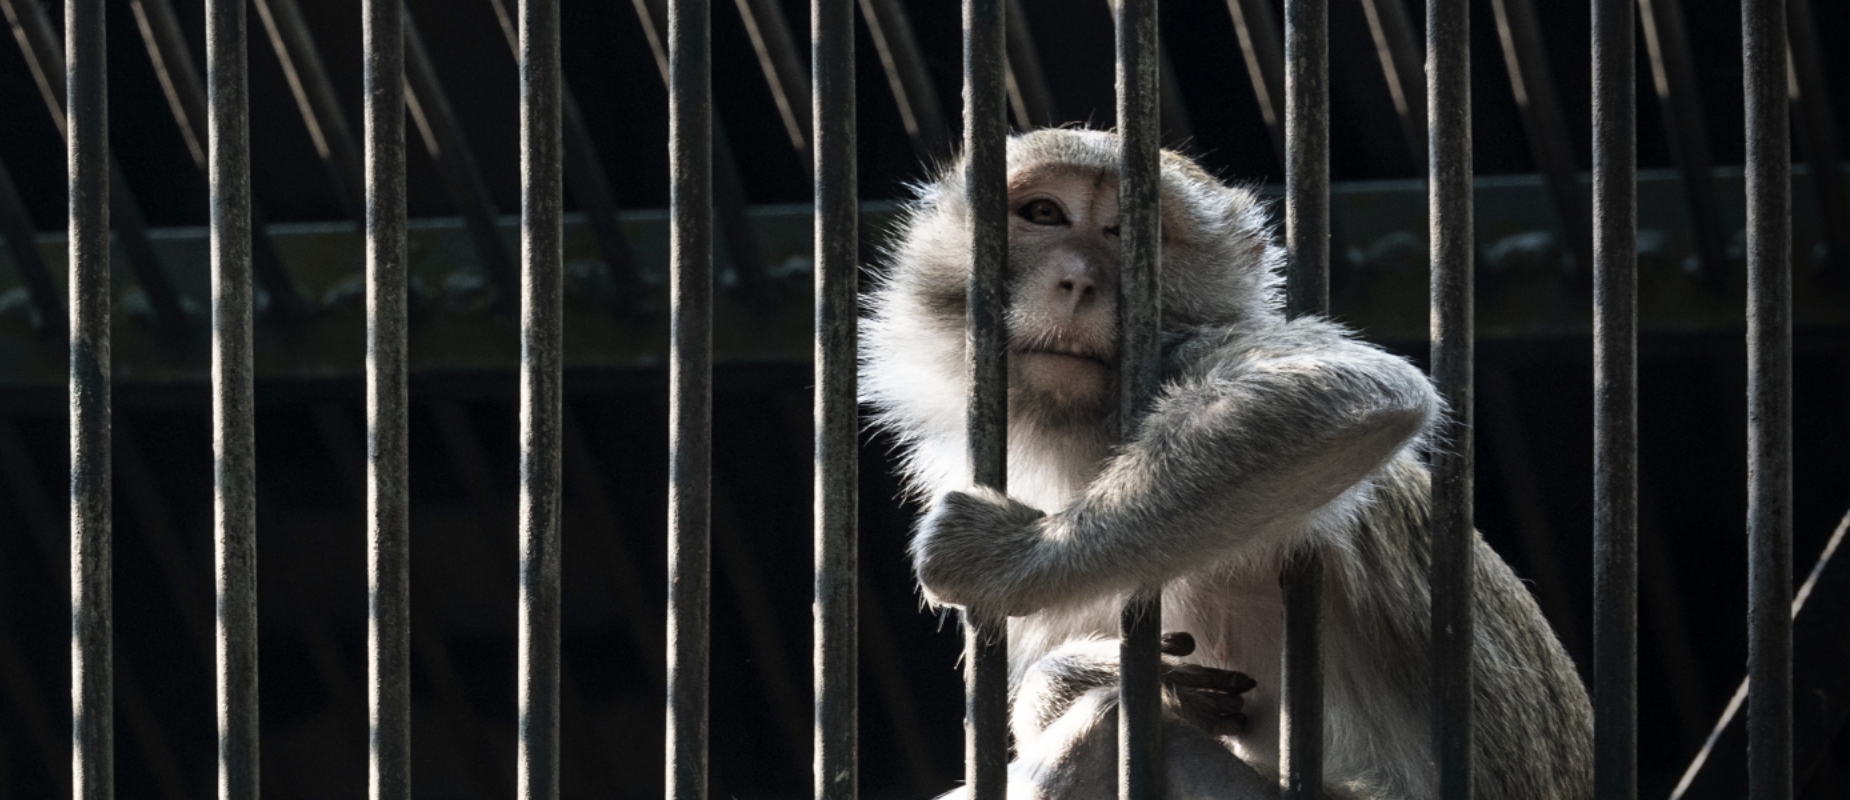 Monkey gripes cage bars